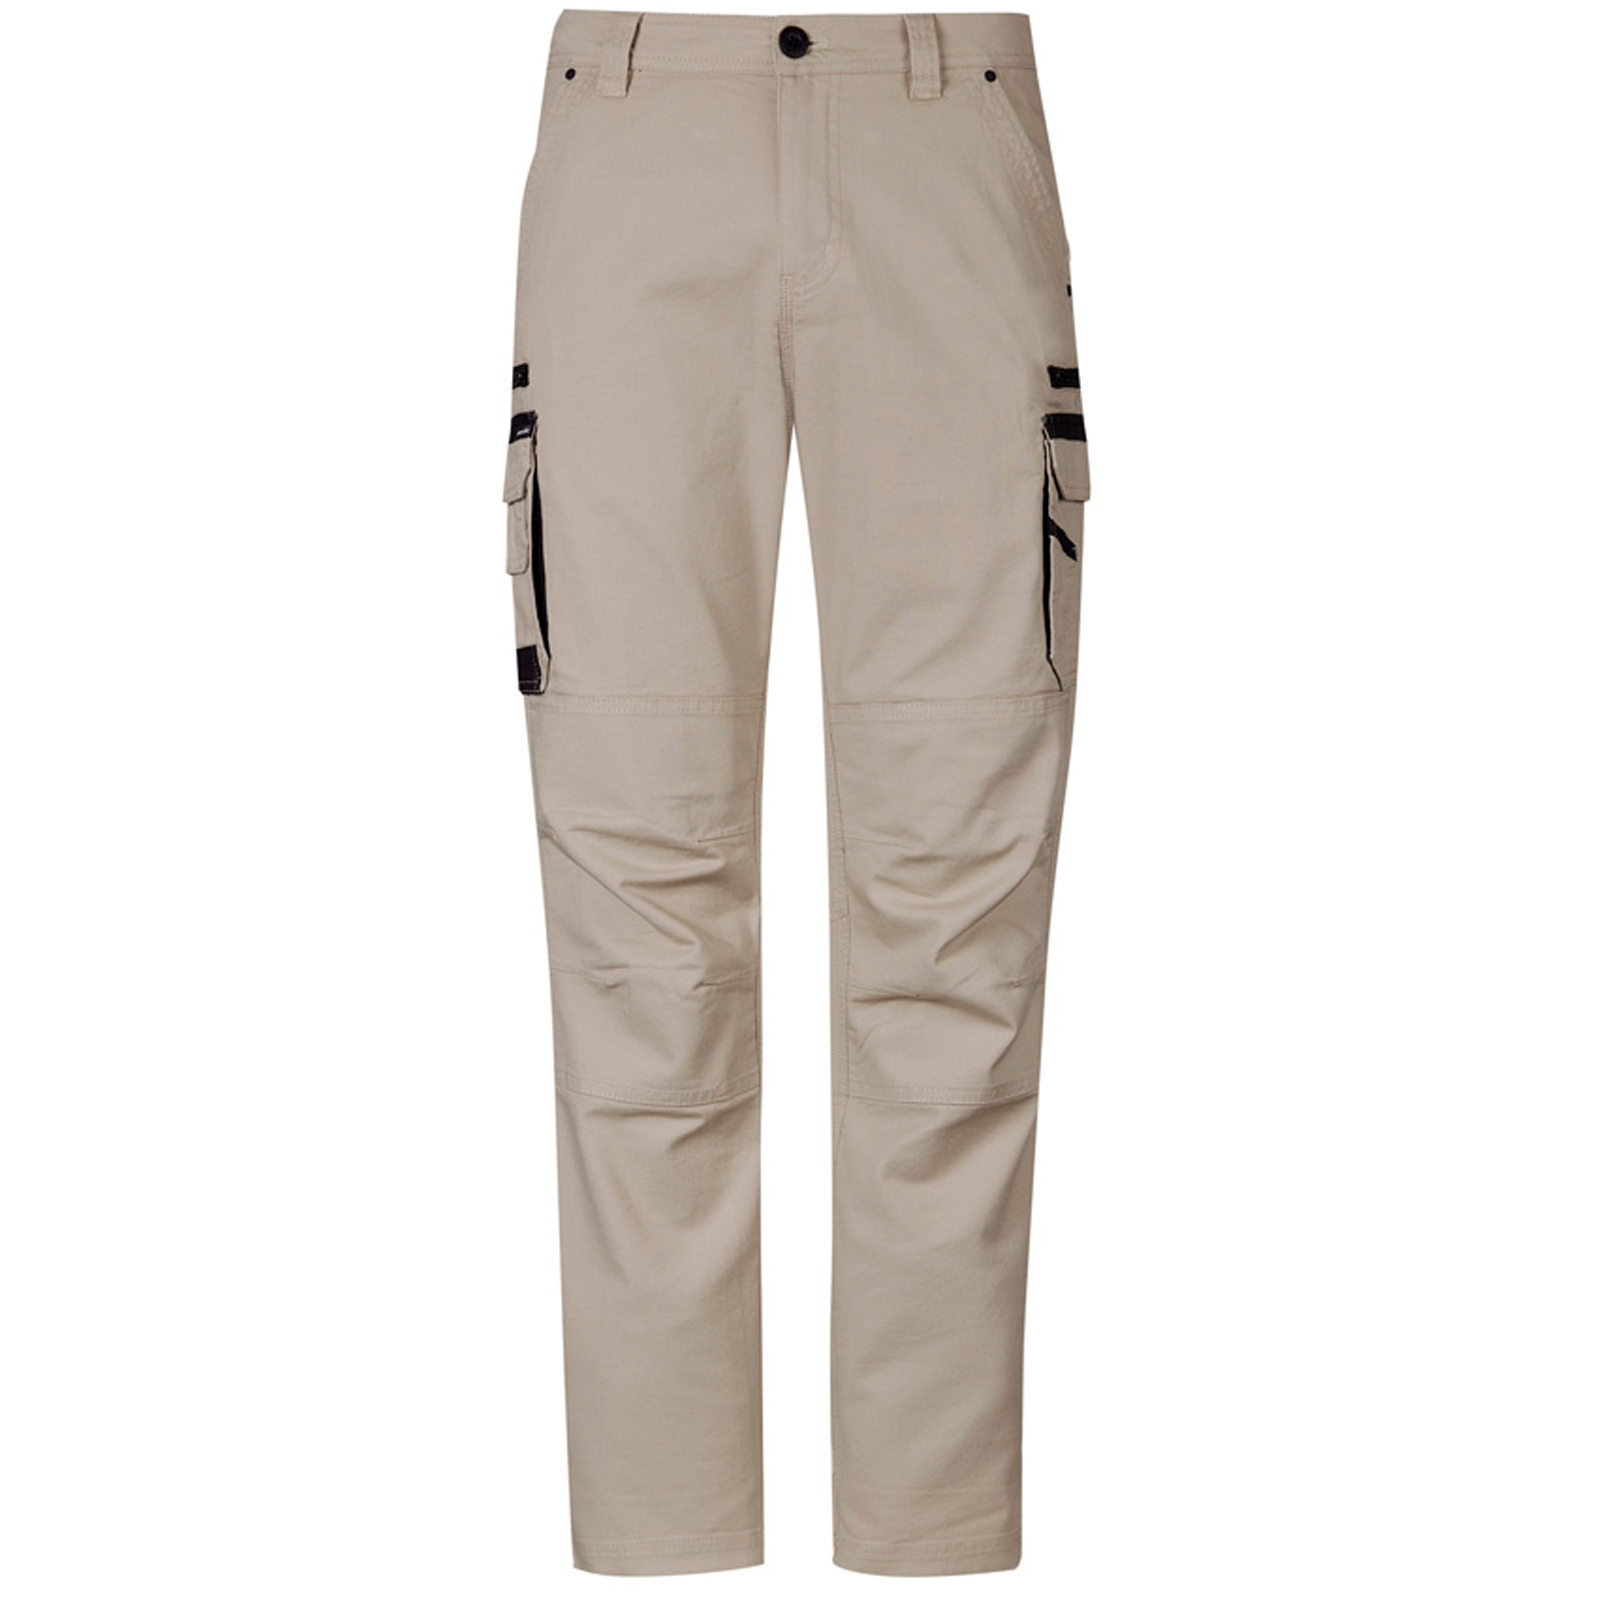 Pants - Work Pants UPF 50+ | SunSafe Australia